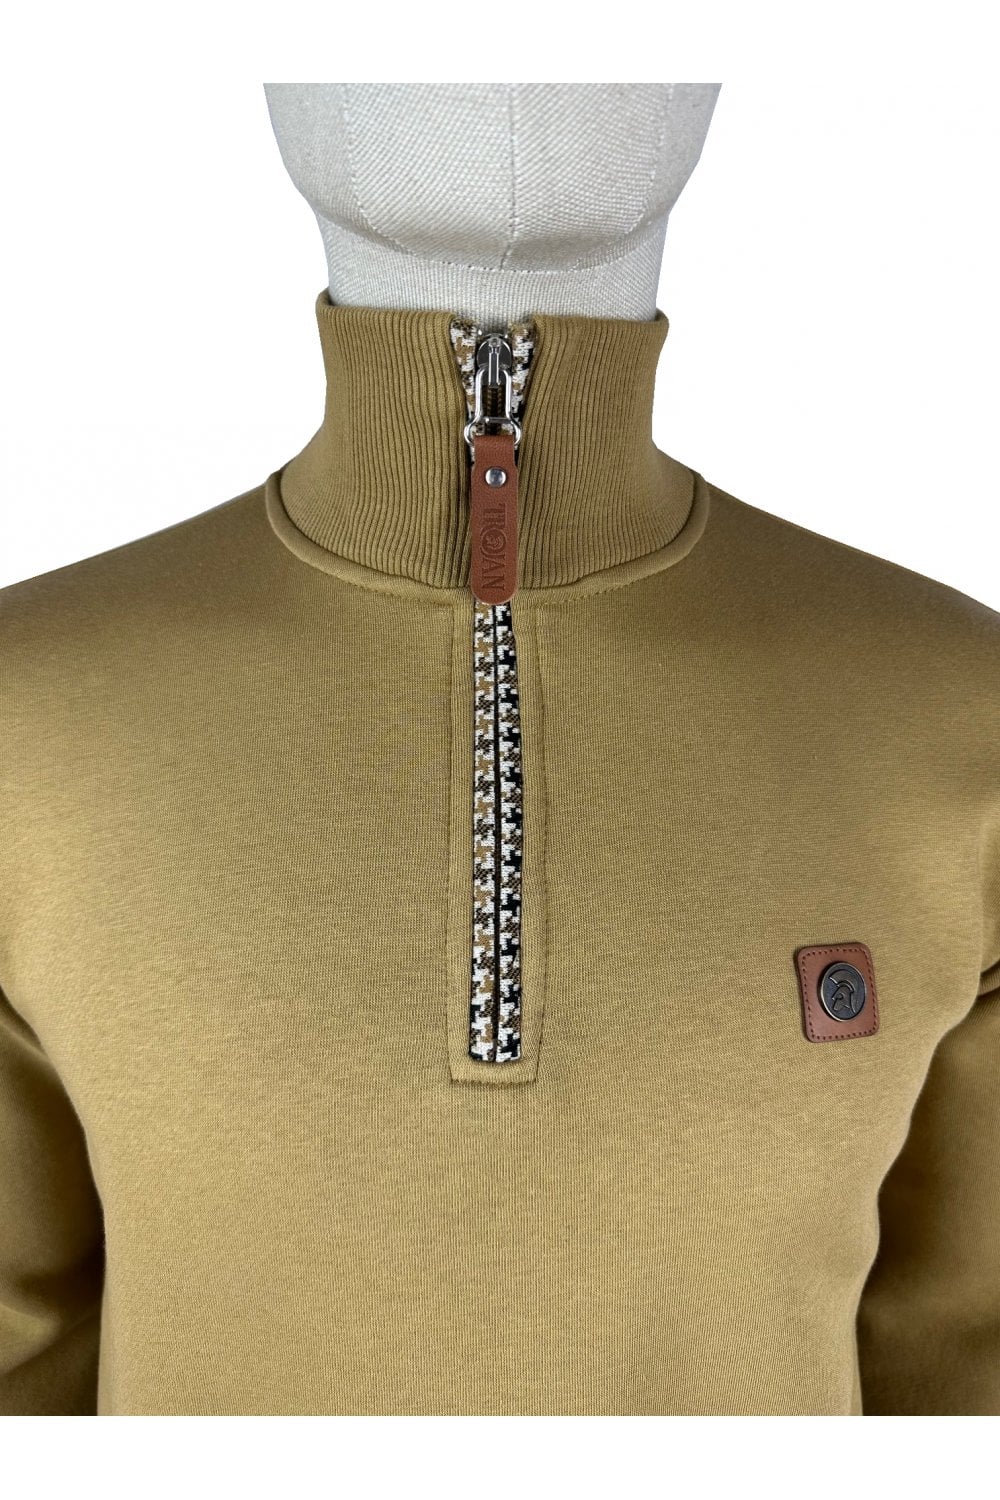 TROJAN Houndstooth Trim 1/4 Zip Sweater TR/8856 Camel - Raw Menswear